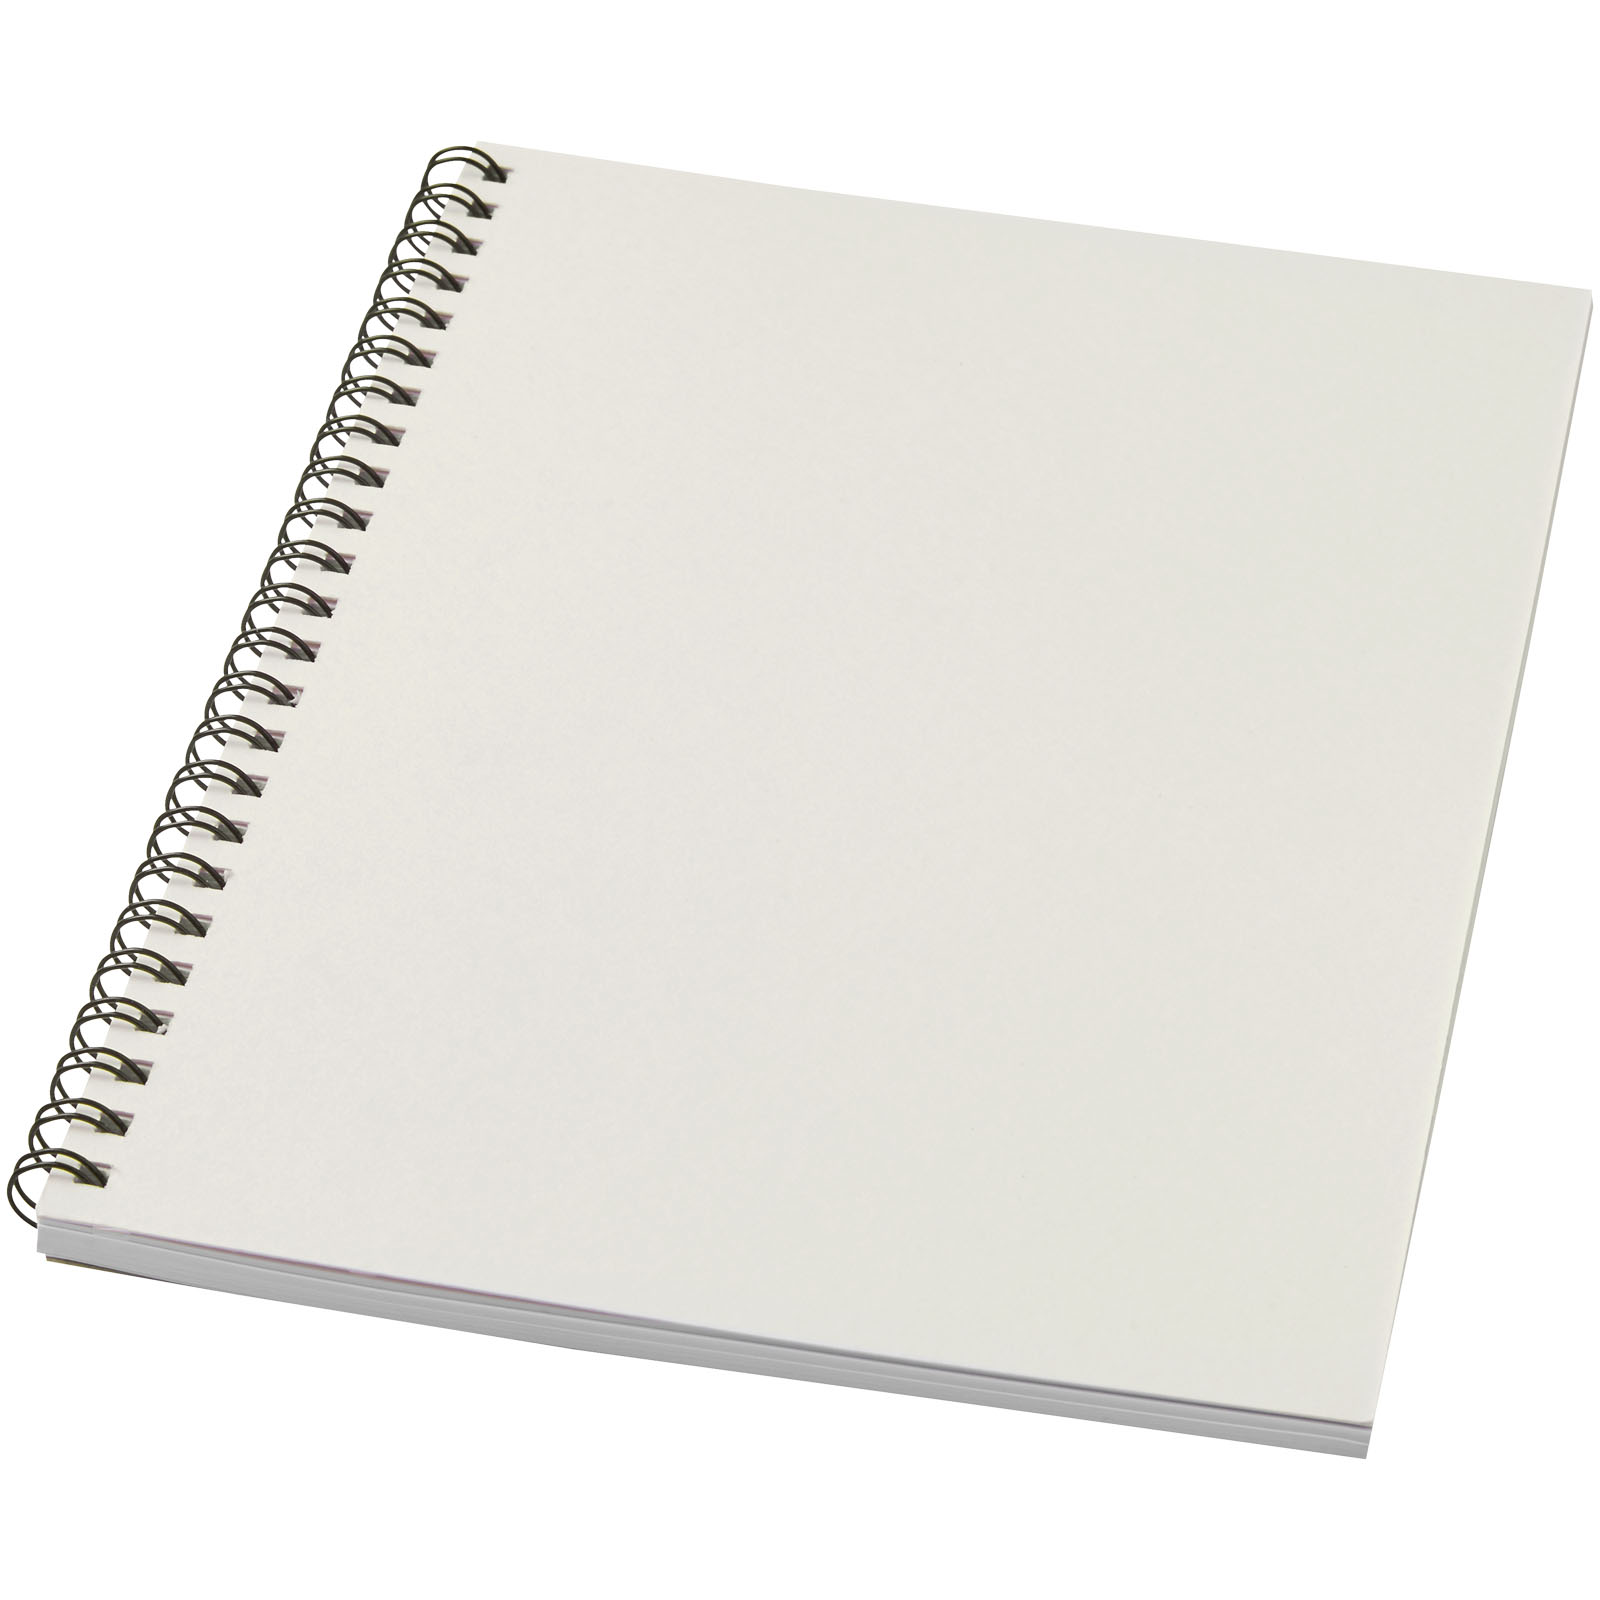 Notebooks & Desk Essentials - Desk-Mate® A5 colour spiral notebook